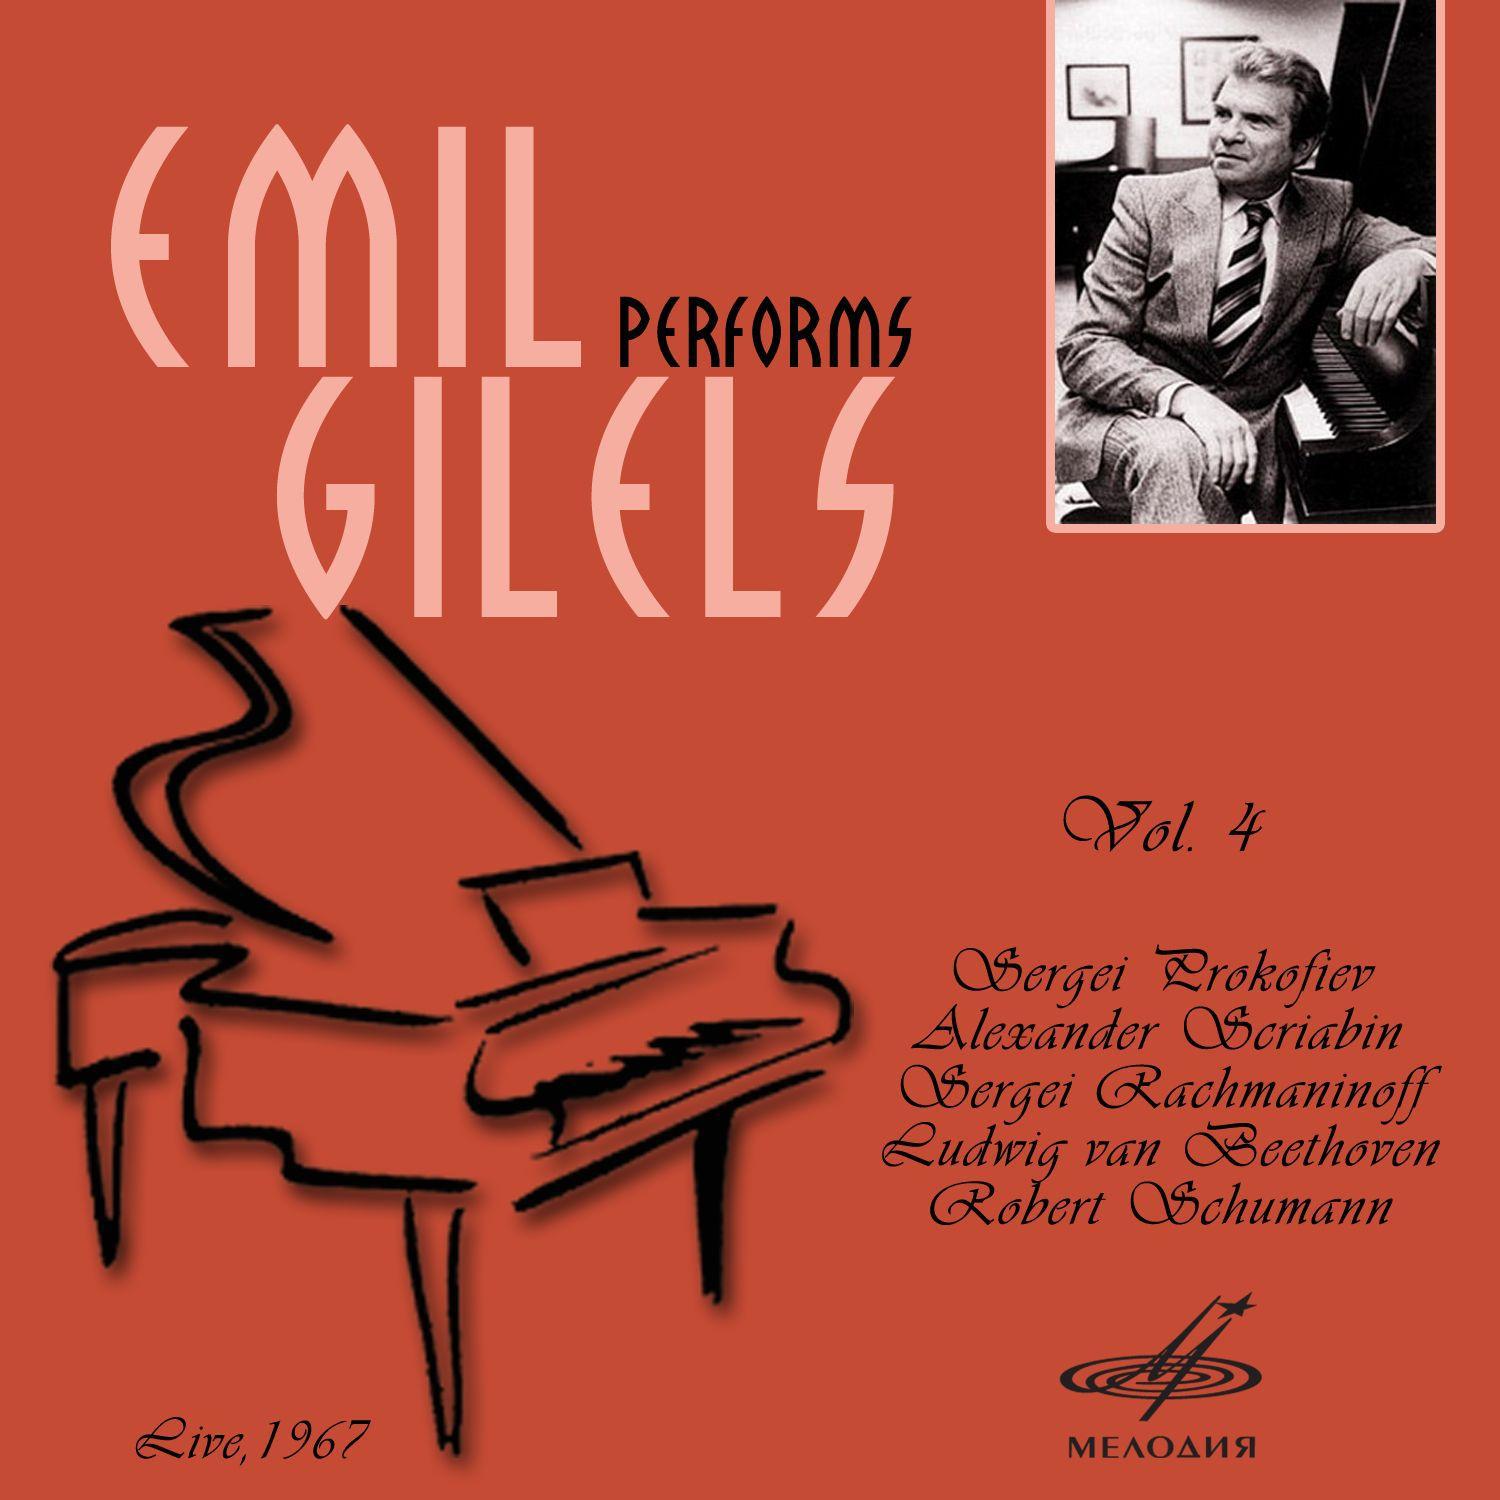 Emil Gilels: Solo Piano Recital. January 26, 1967